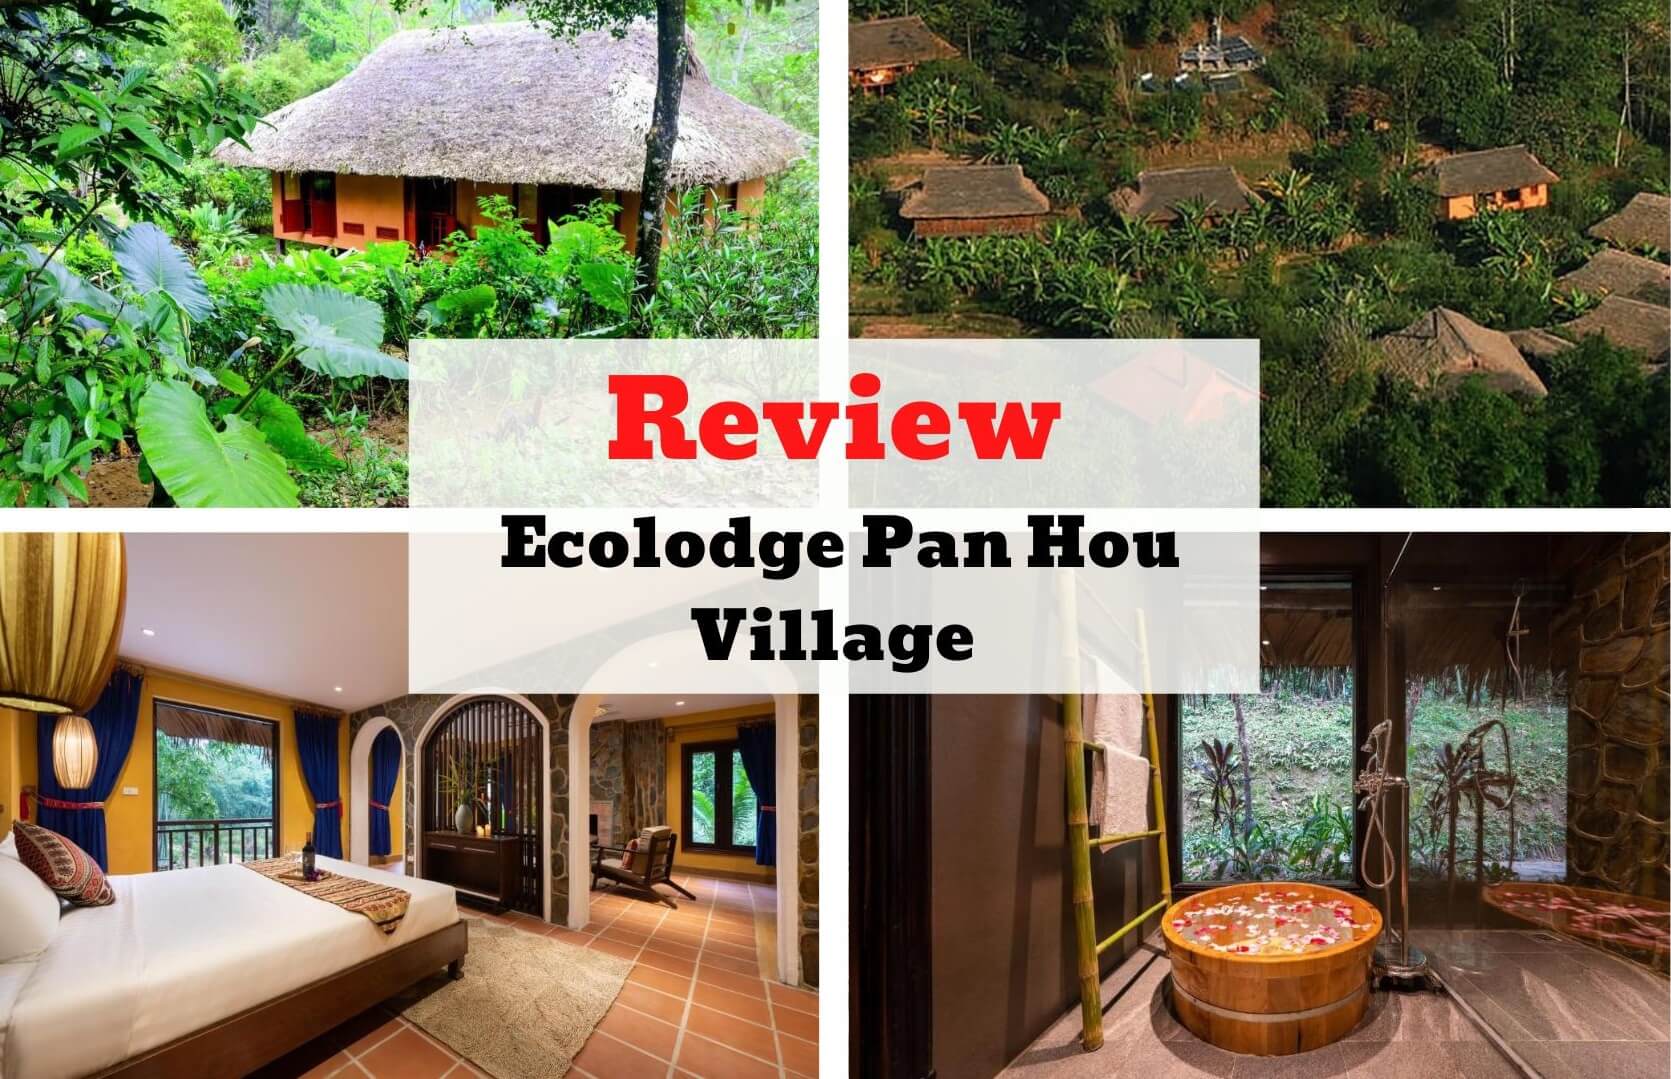 Review Ecolodge Pan Hou Village - Bản tình ca của núi rừng